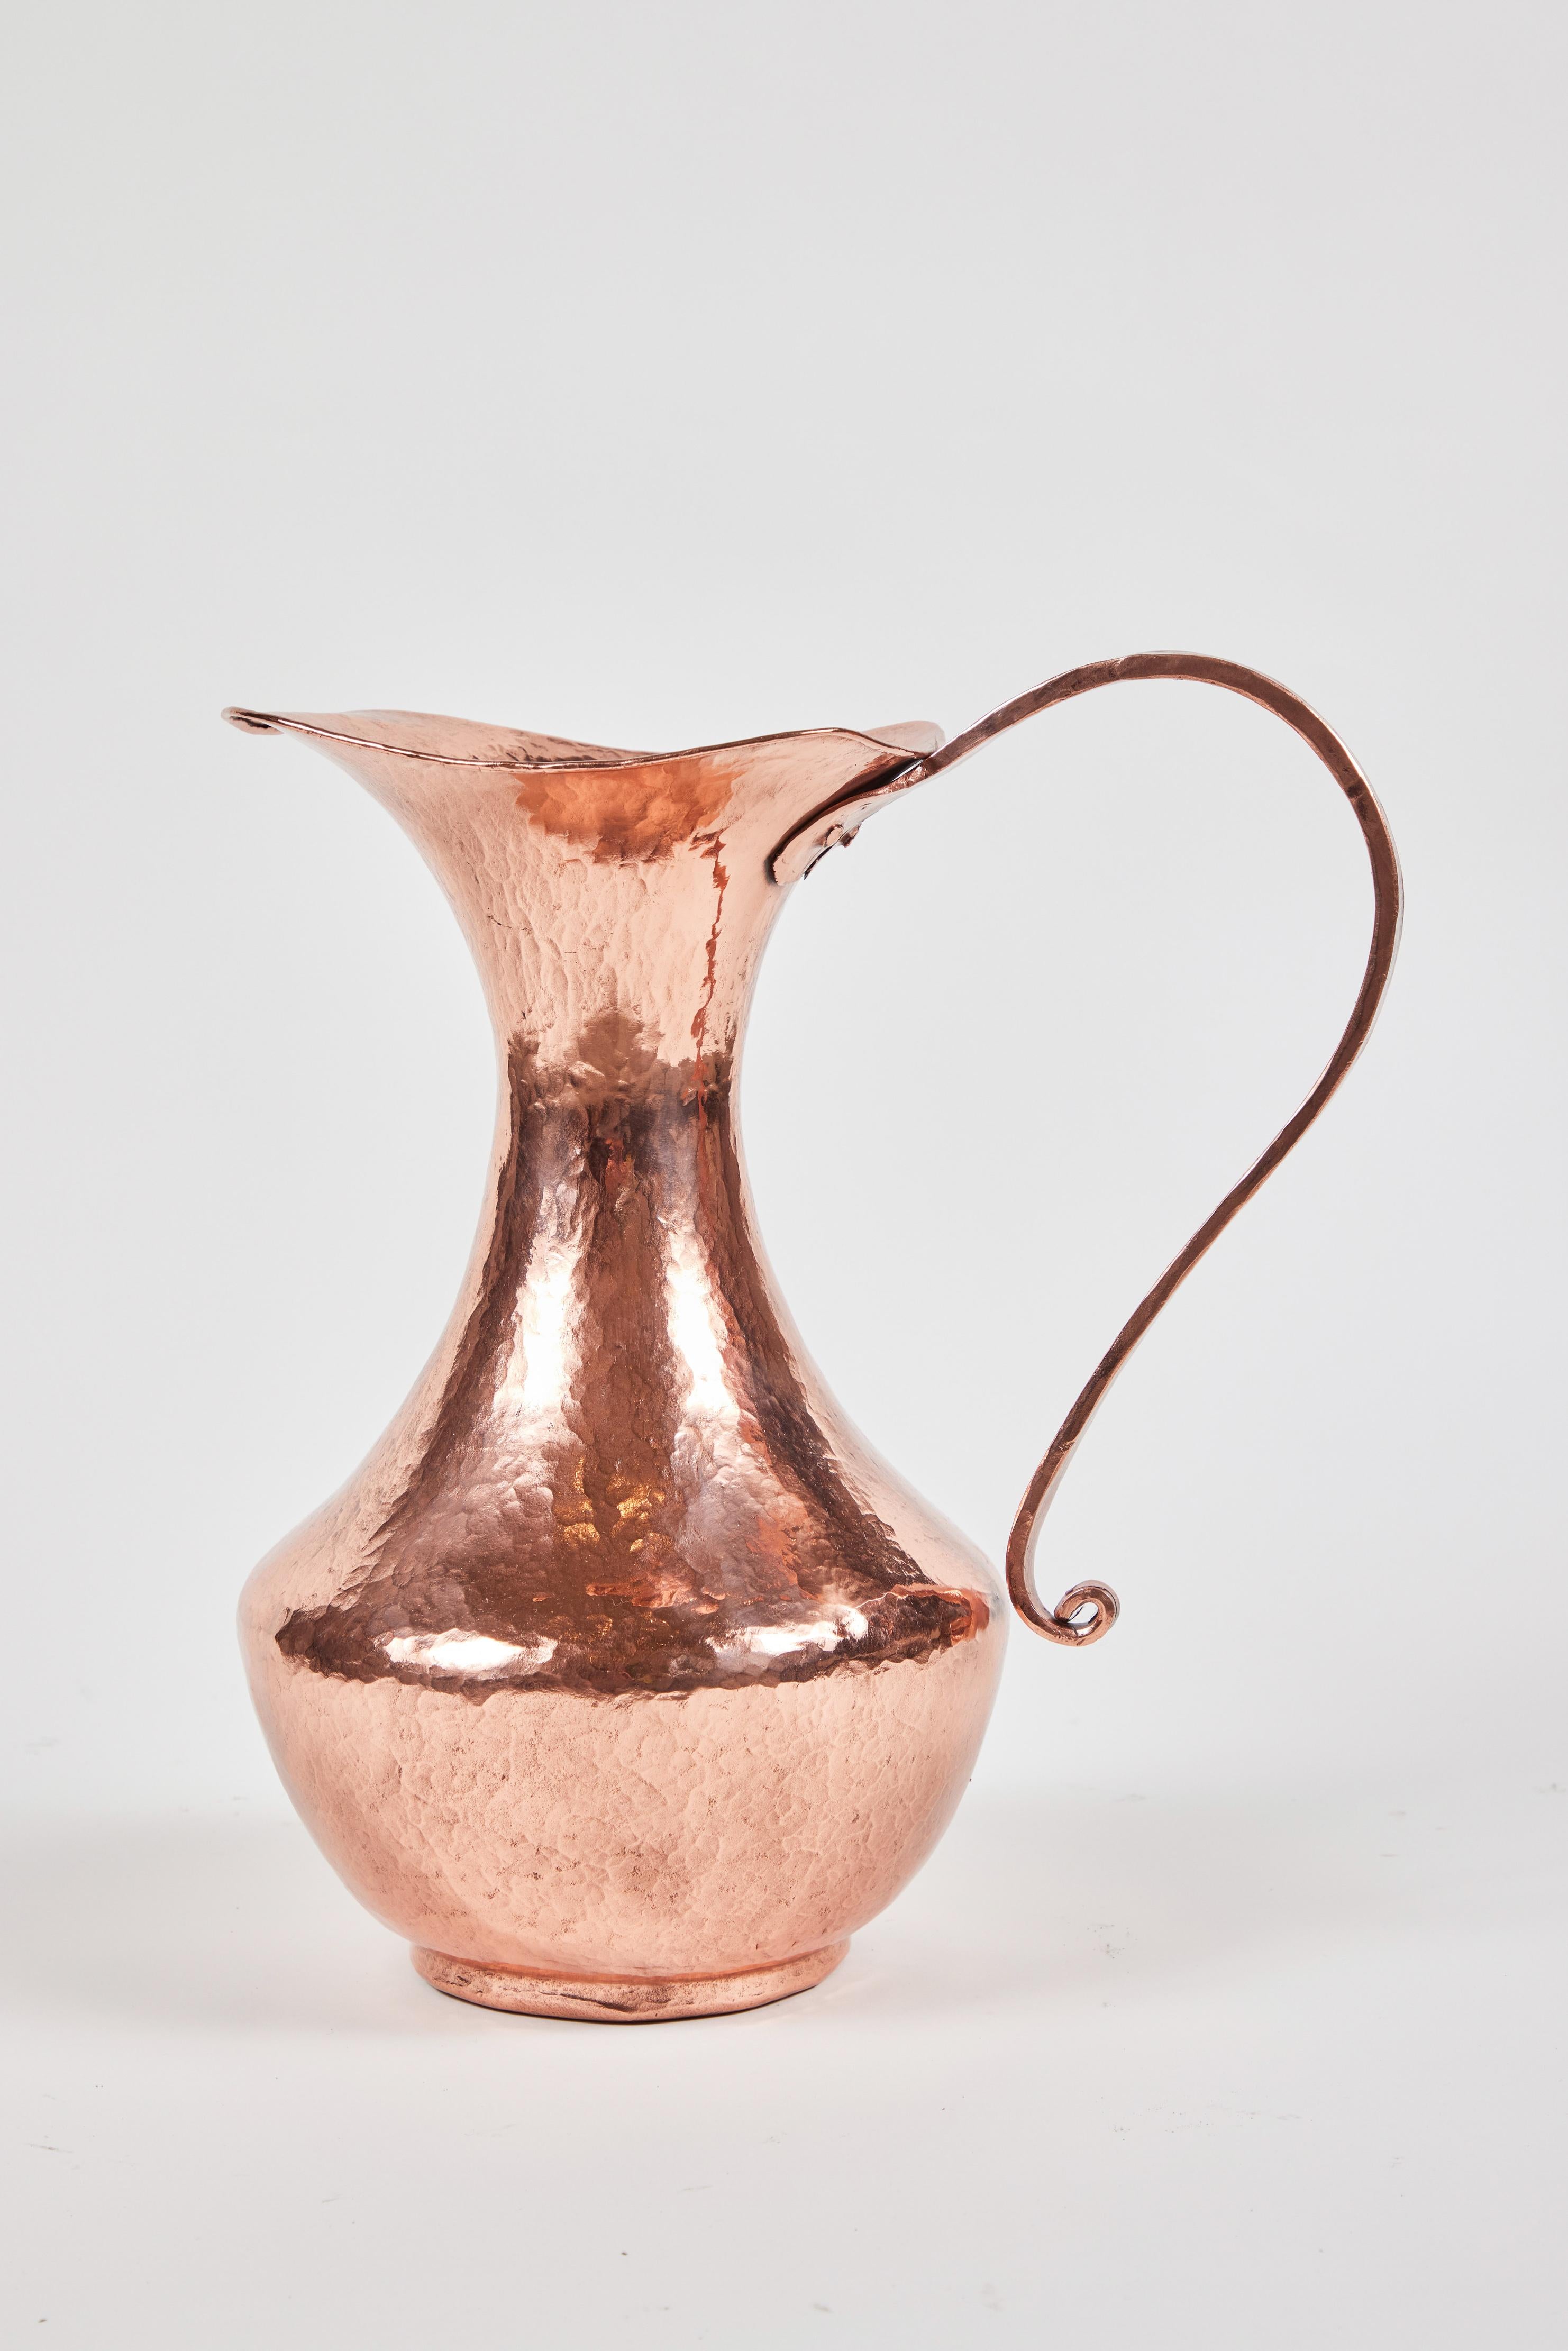 Vintage hand hammered copper pitcher, newly polished.